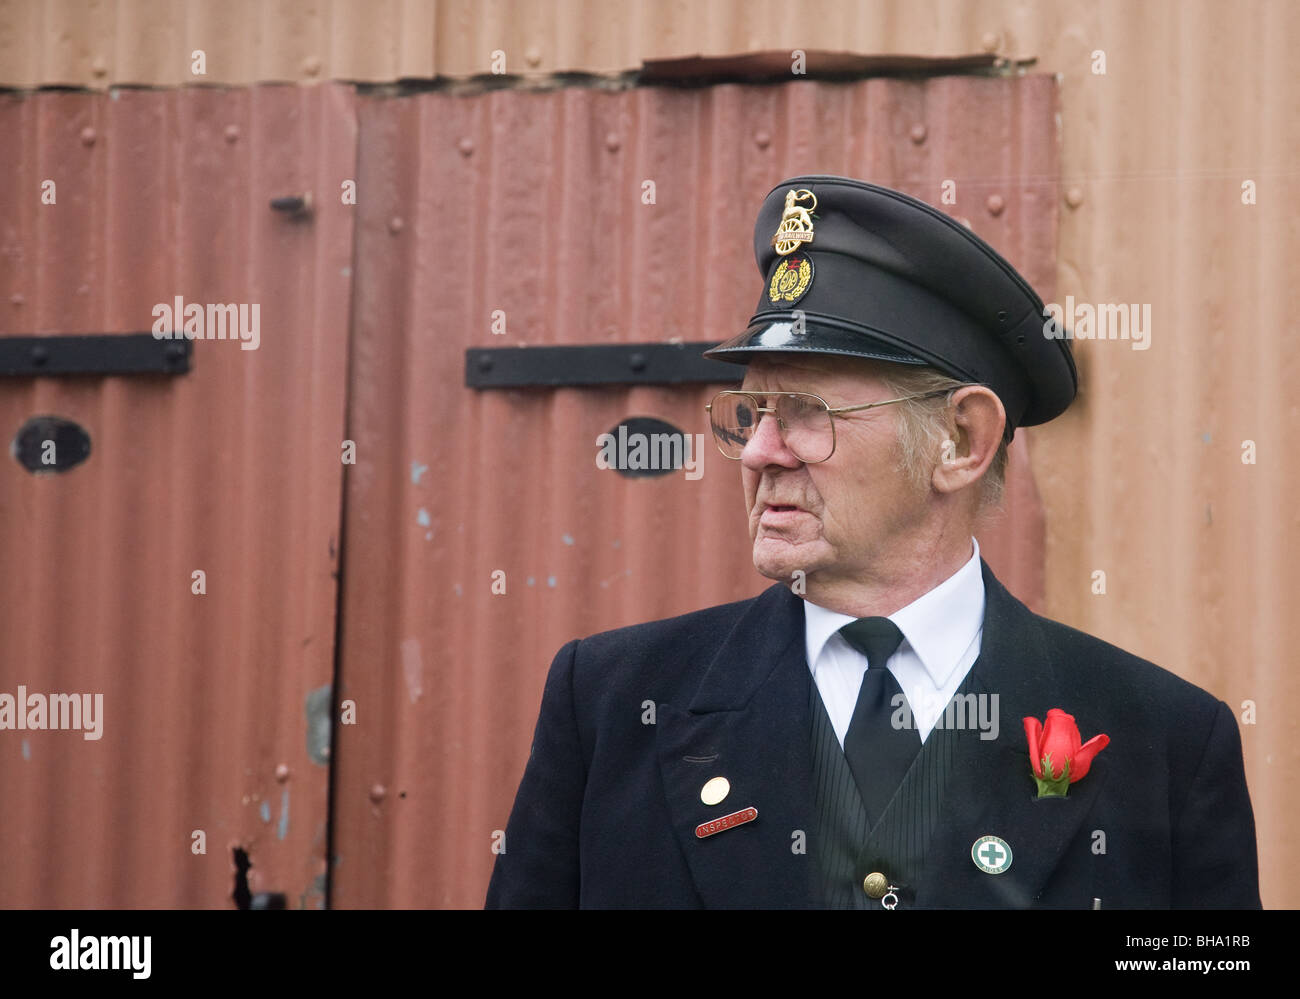 Portrait of Inspector on South Devon railway, UK. Stock Photo